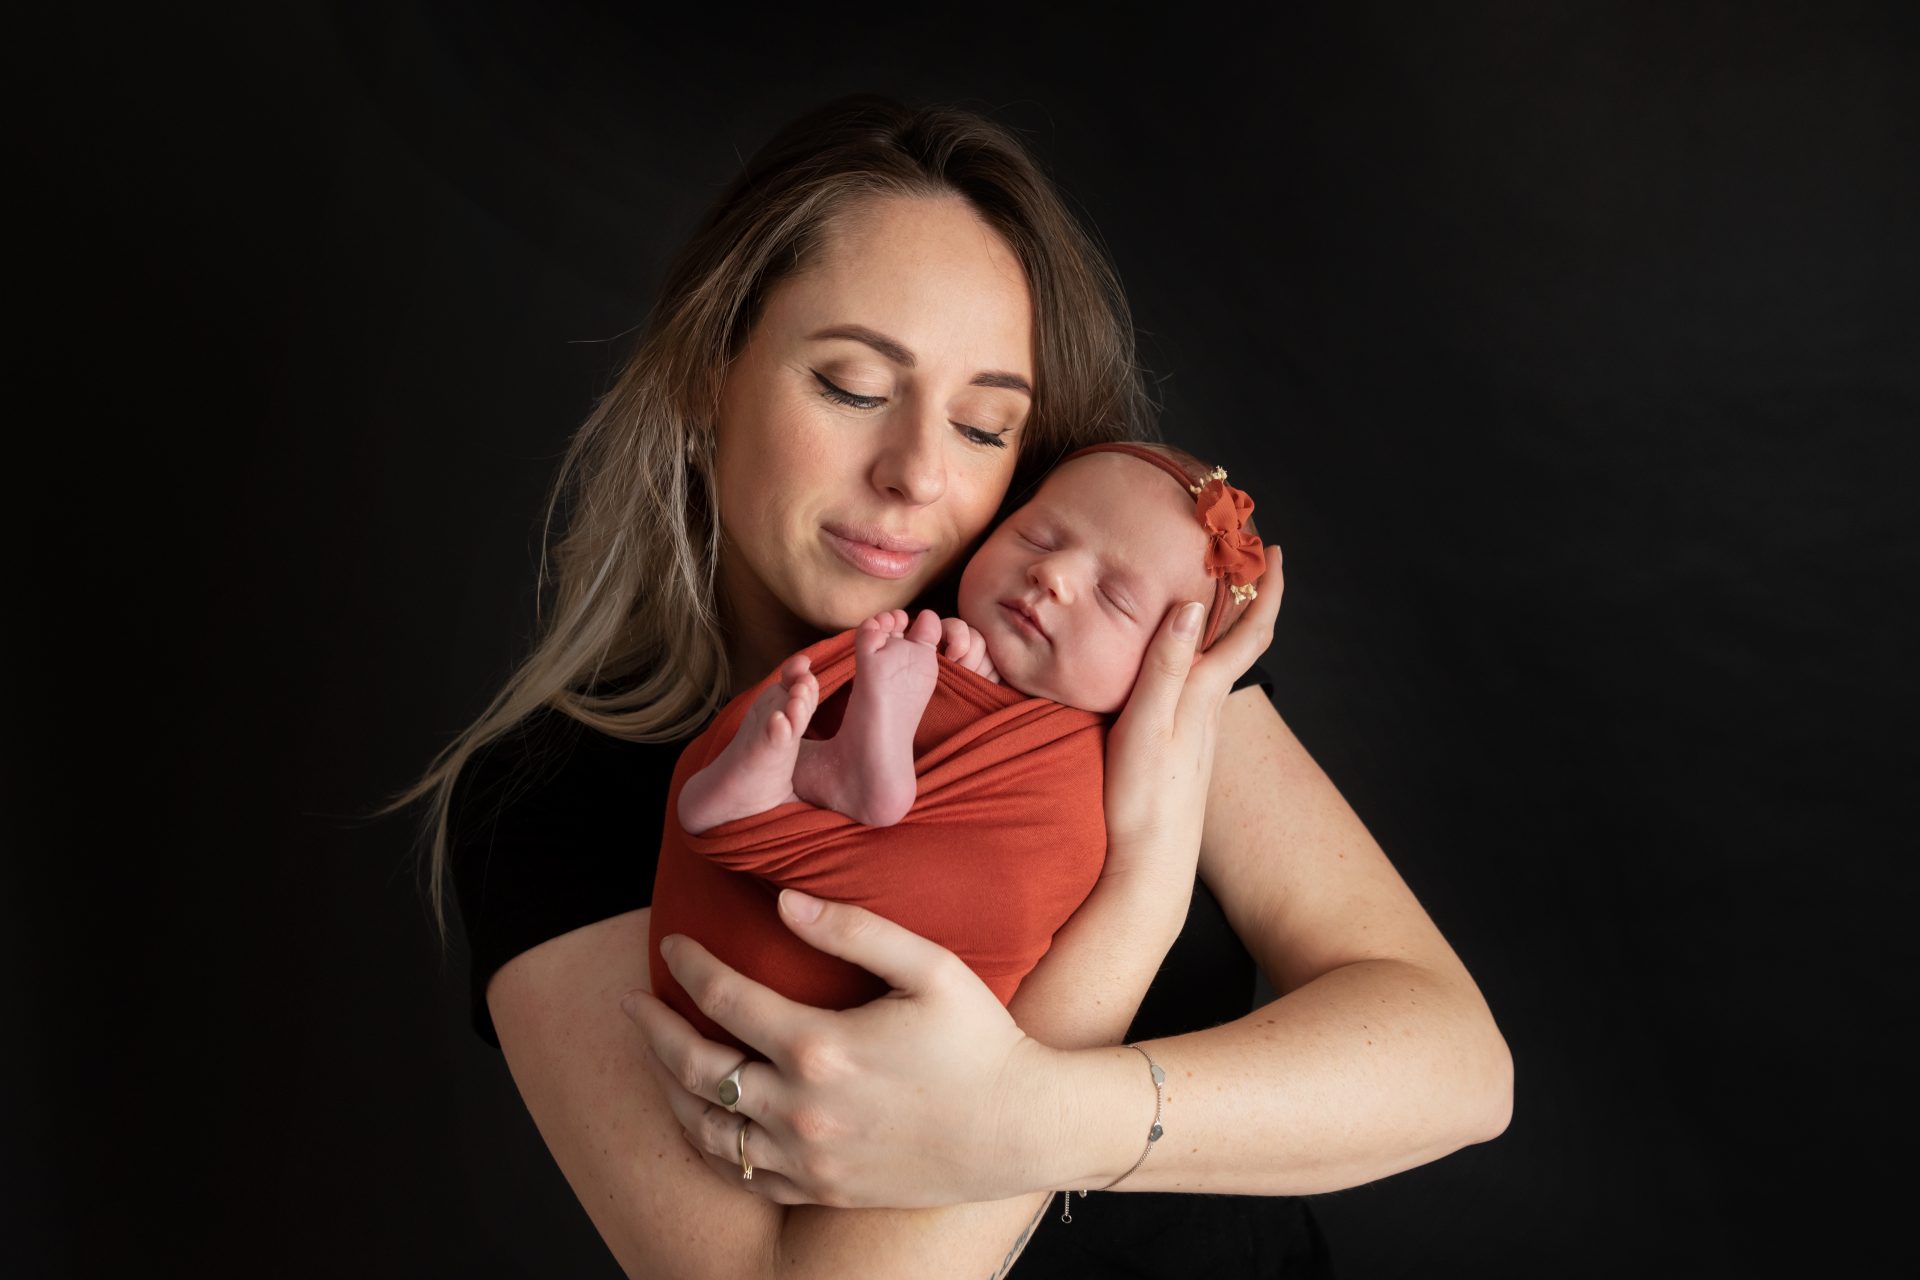 Fotoshoot Newborn Almere